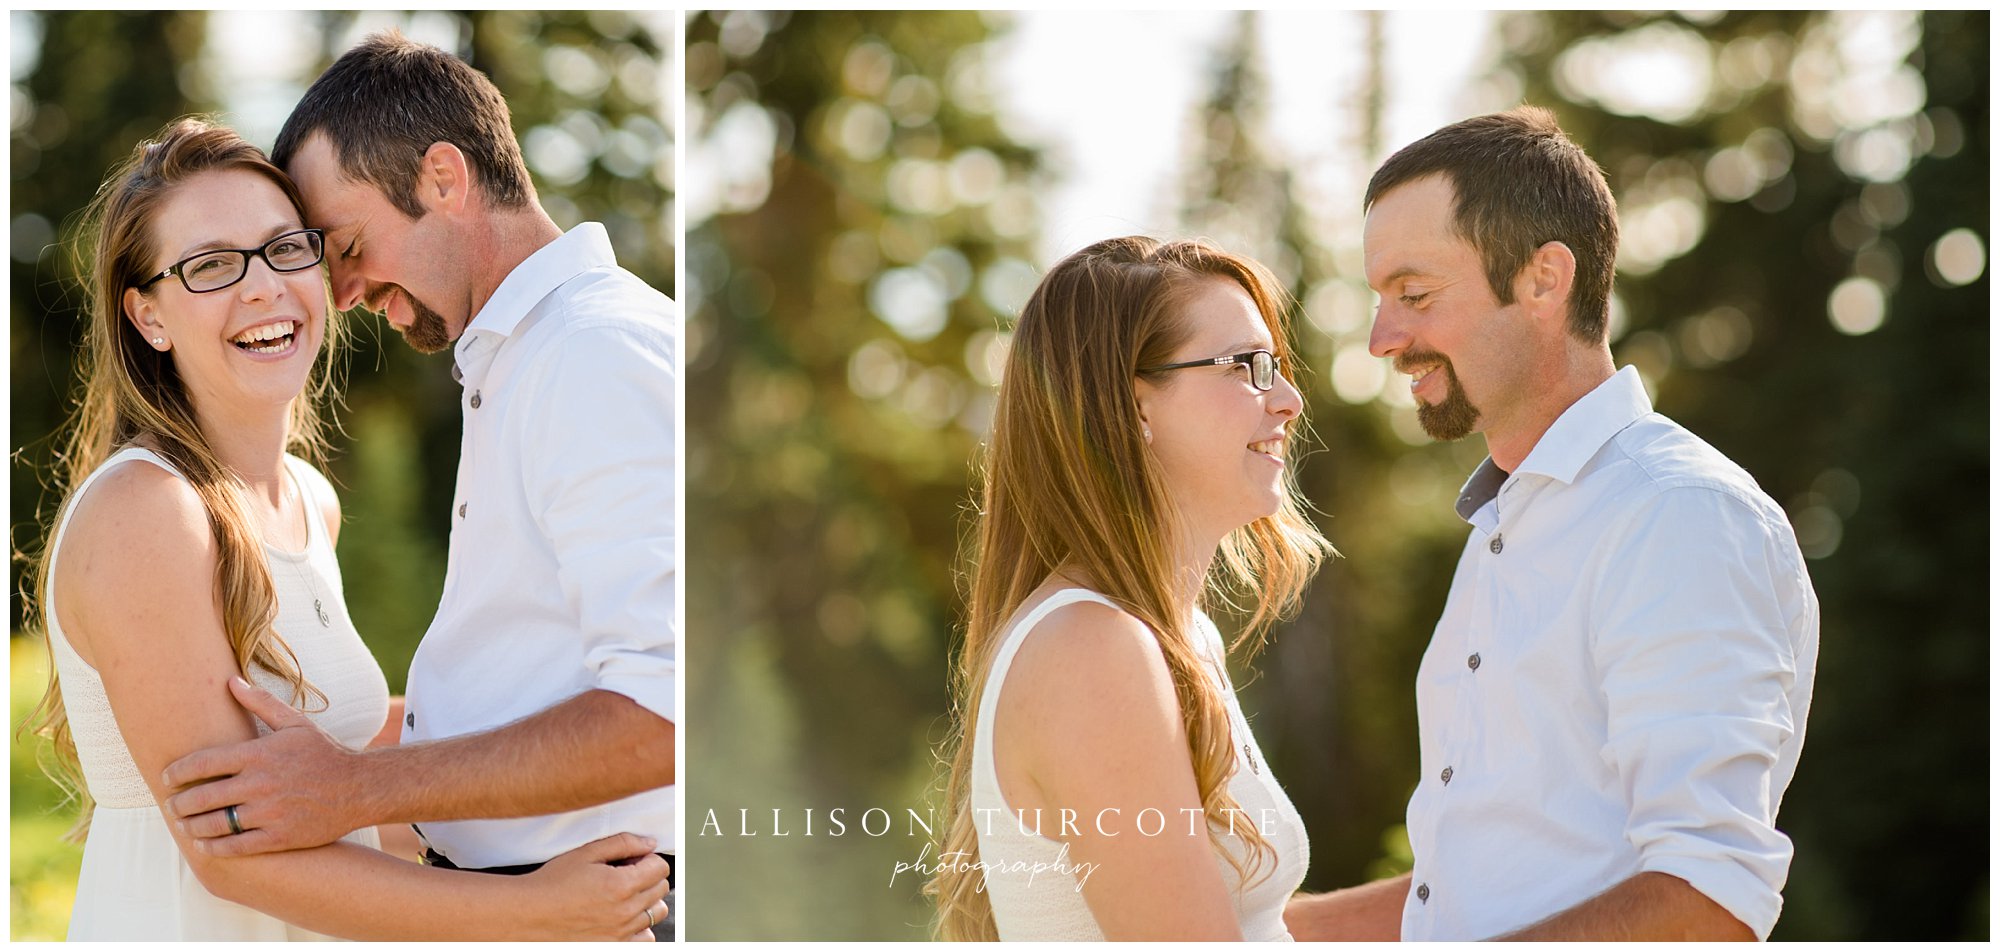 Mount Rainier Photography, Family Photographer, Couples Photography